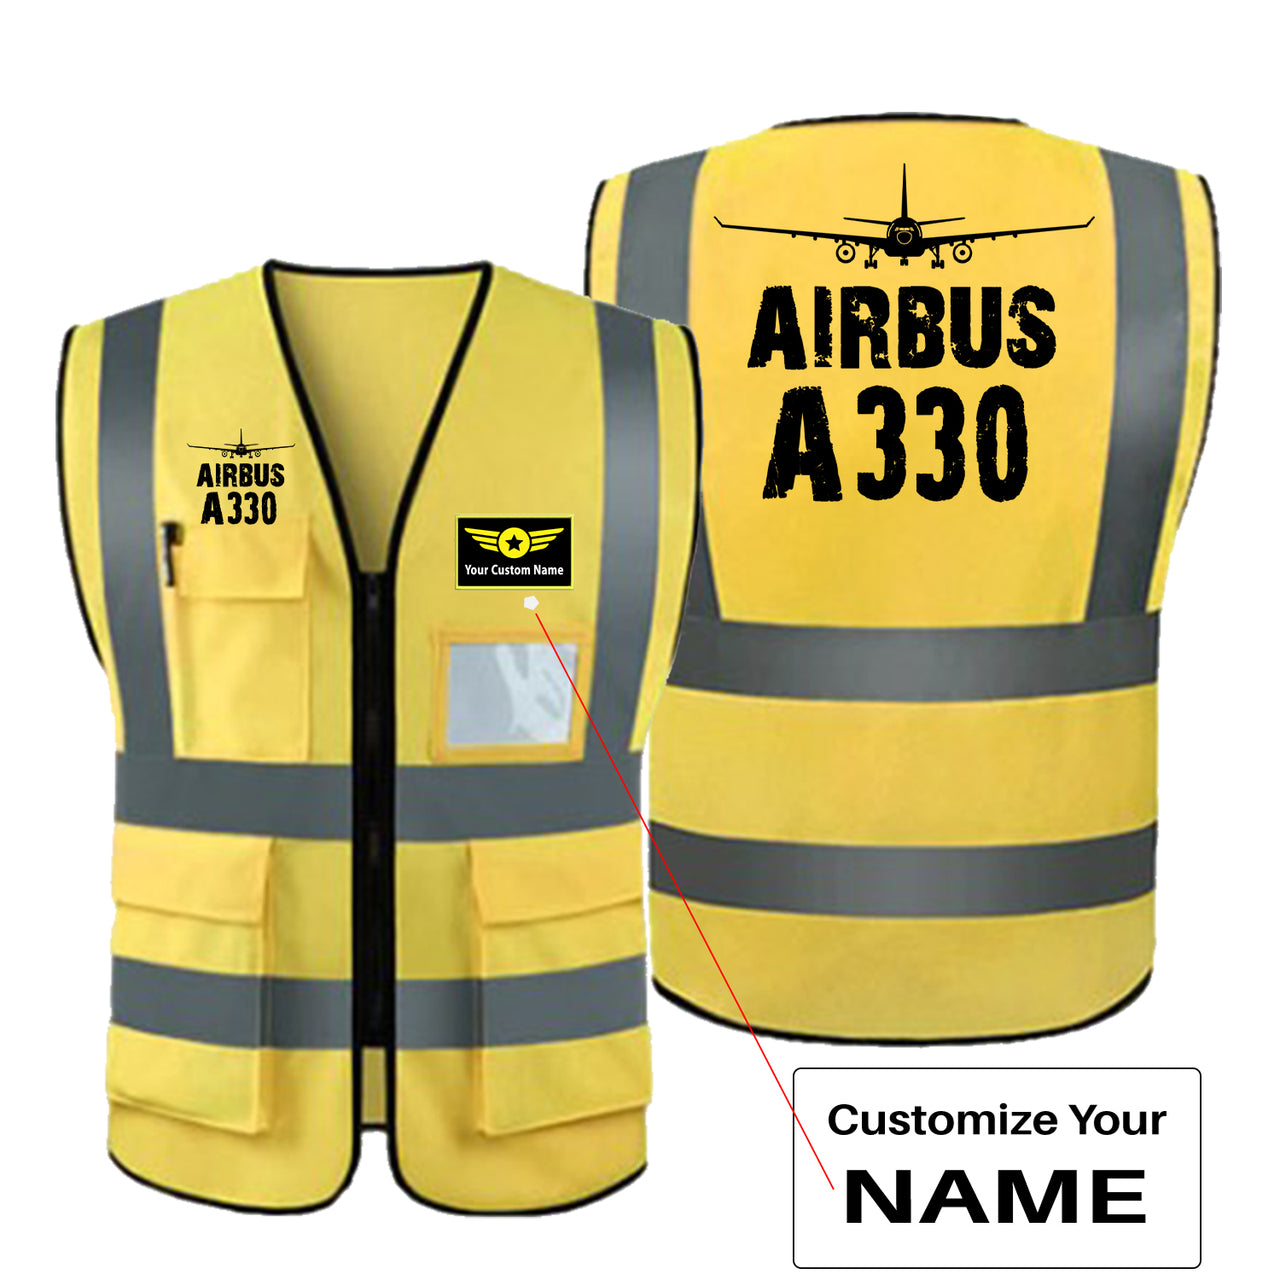 Airbus A330 & Plane Designed Reflective Vests